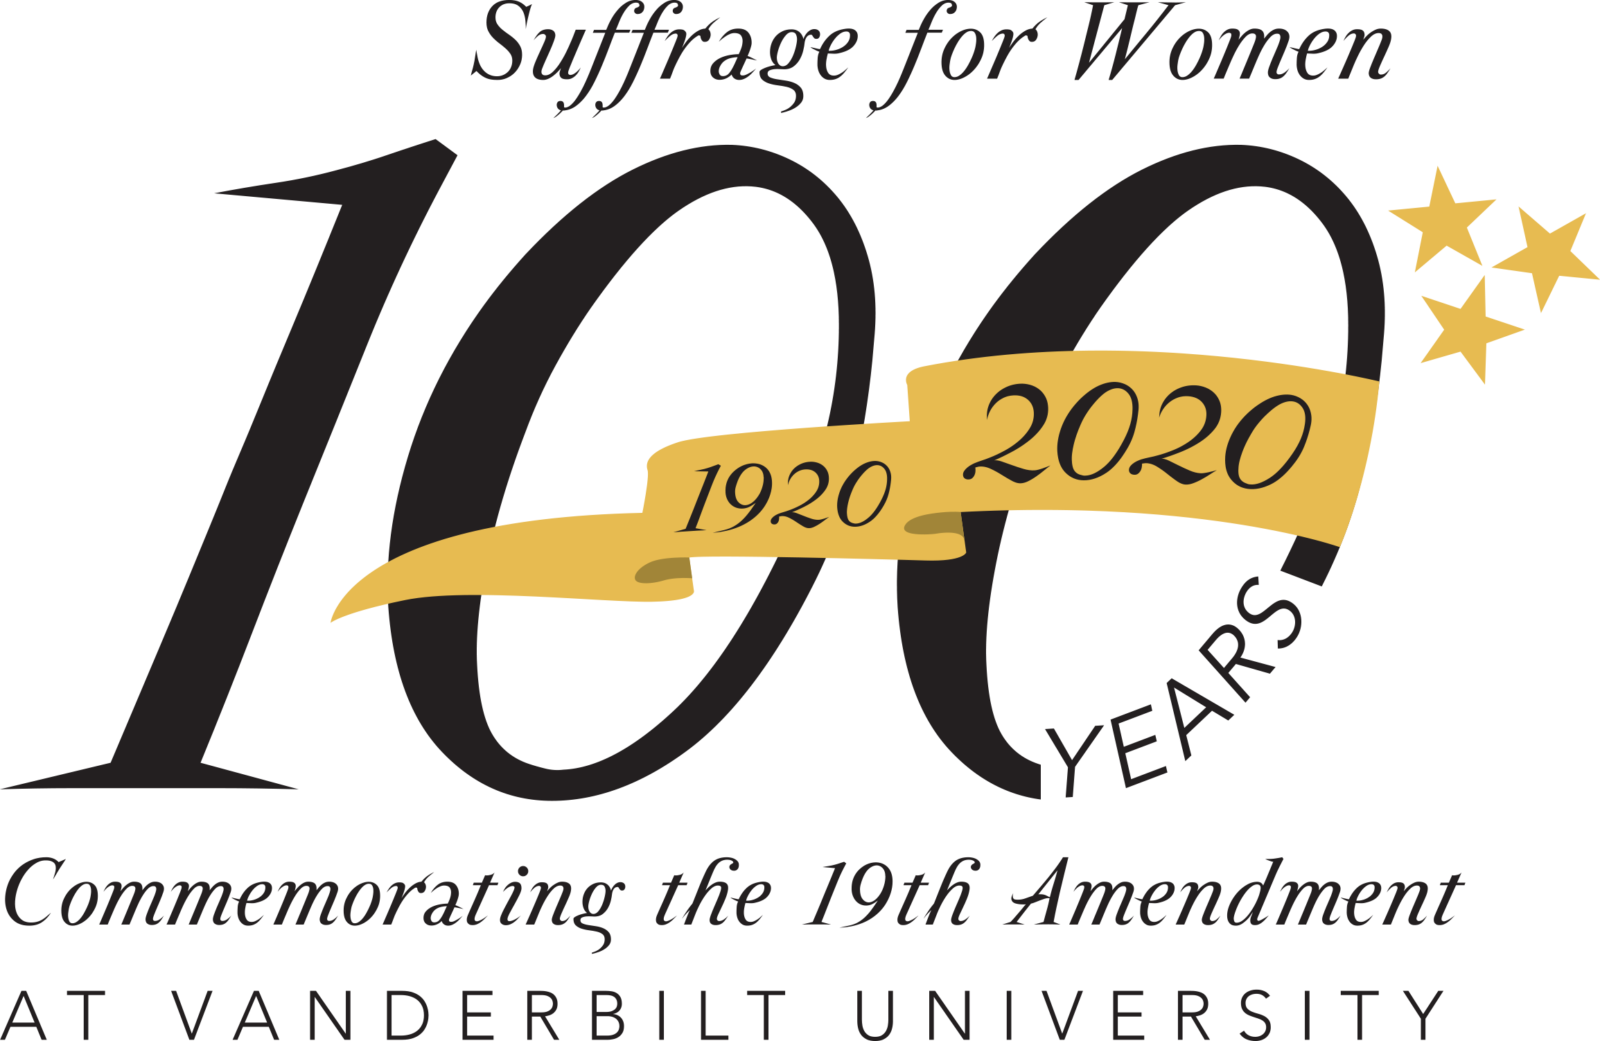 Vanderbilt recognizing 19th Amendment centennial throughout 2020; new website launched | Vanderbilt University